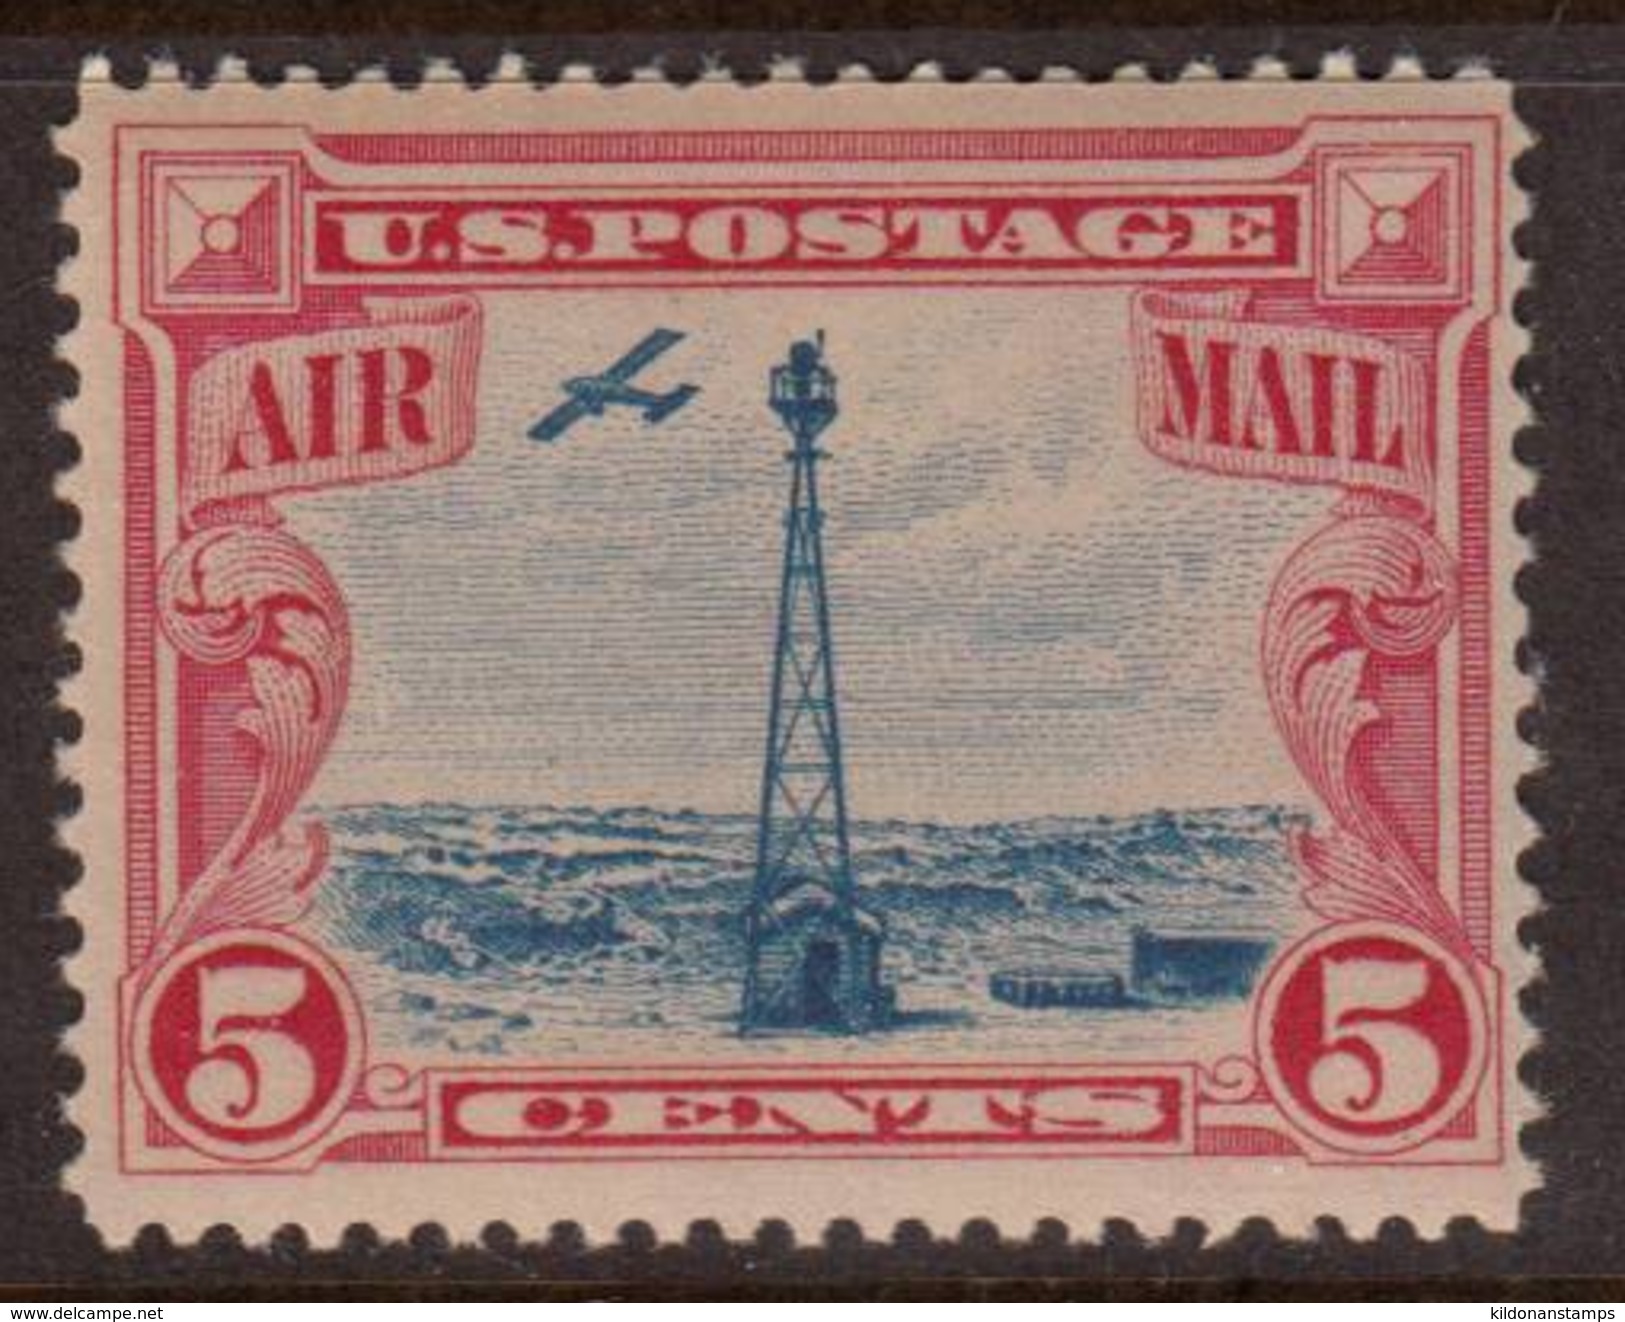 United States 1928 Air Mail, 5c Carmine & Blue, Mint No Hinge, Sc# C11 - 1b. 1918-1940 Unused